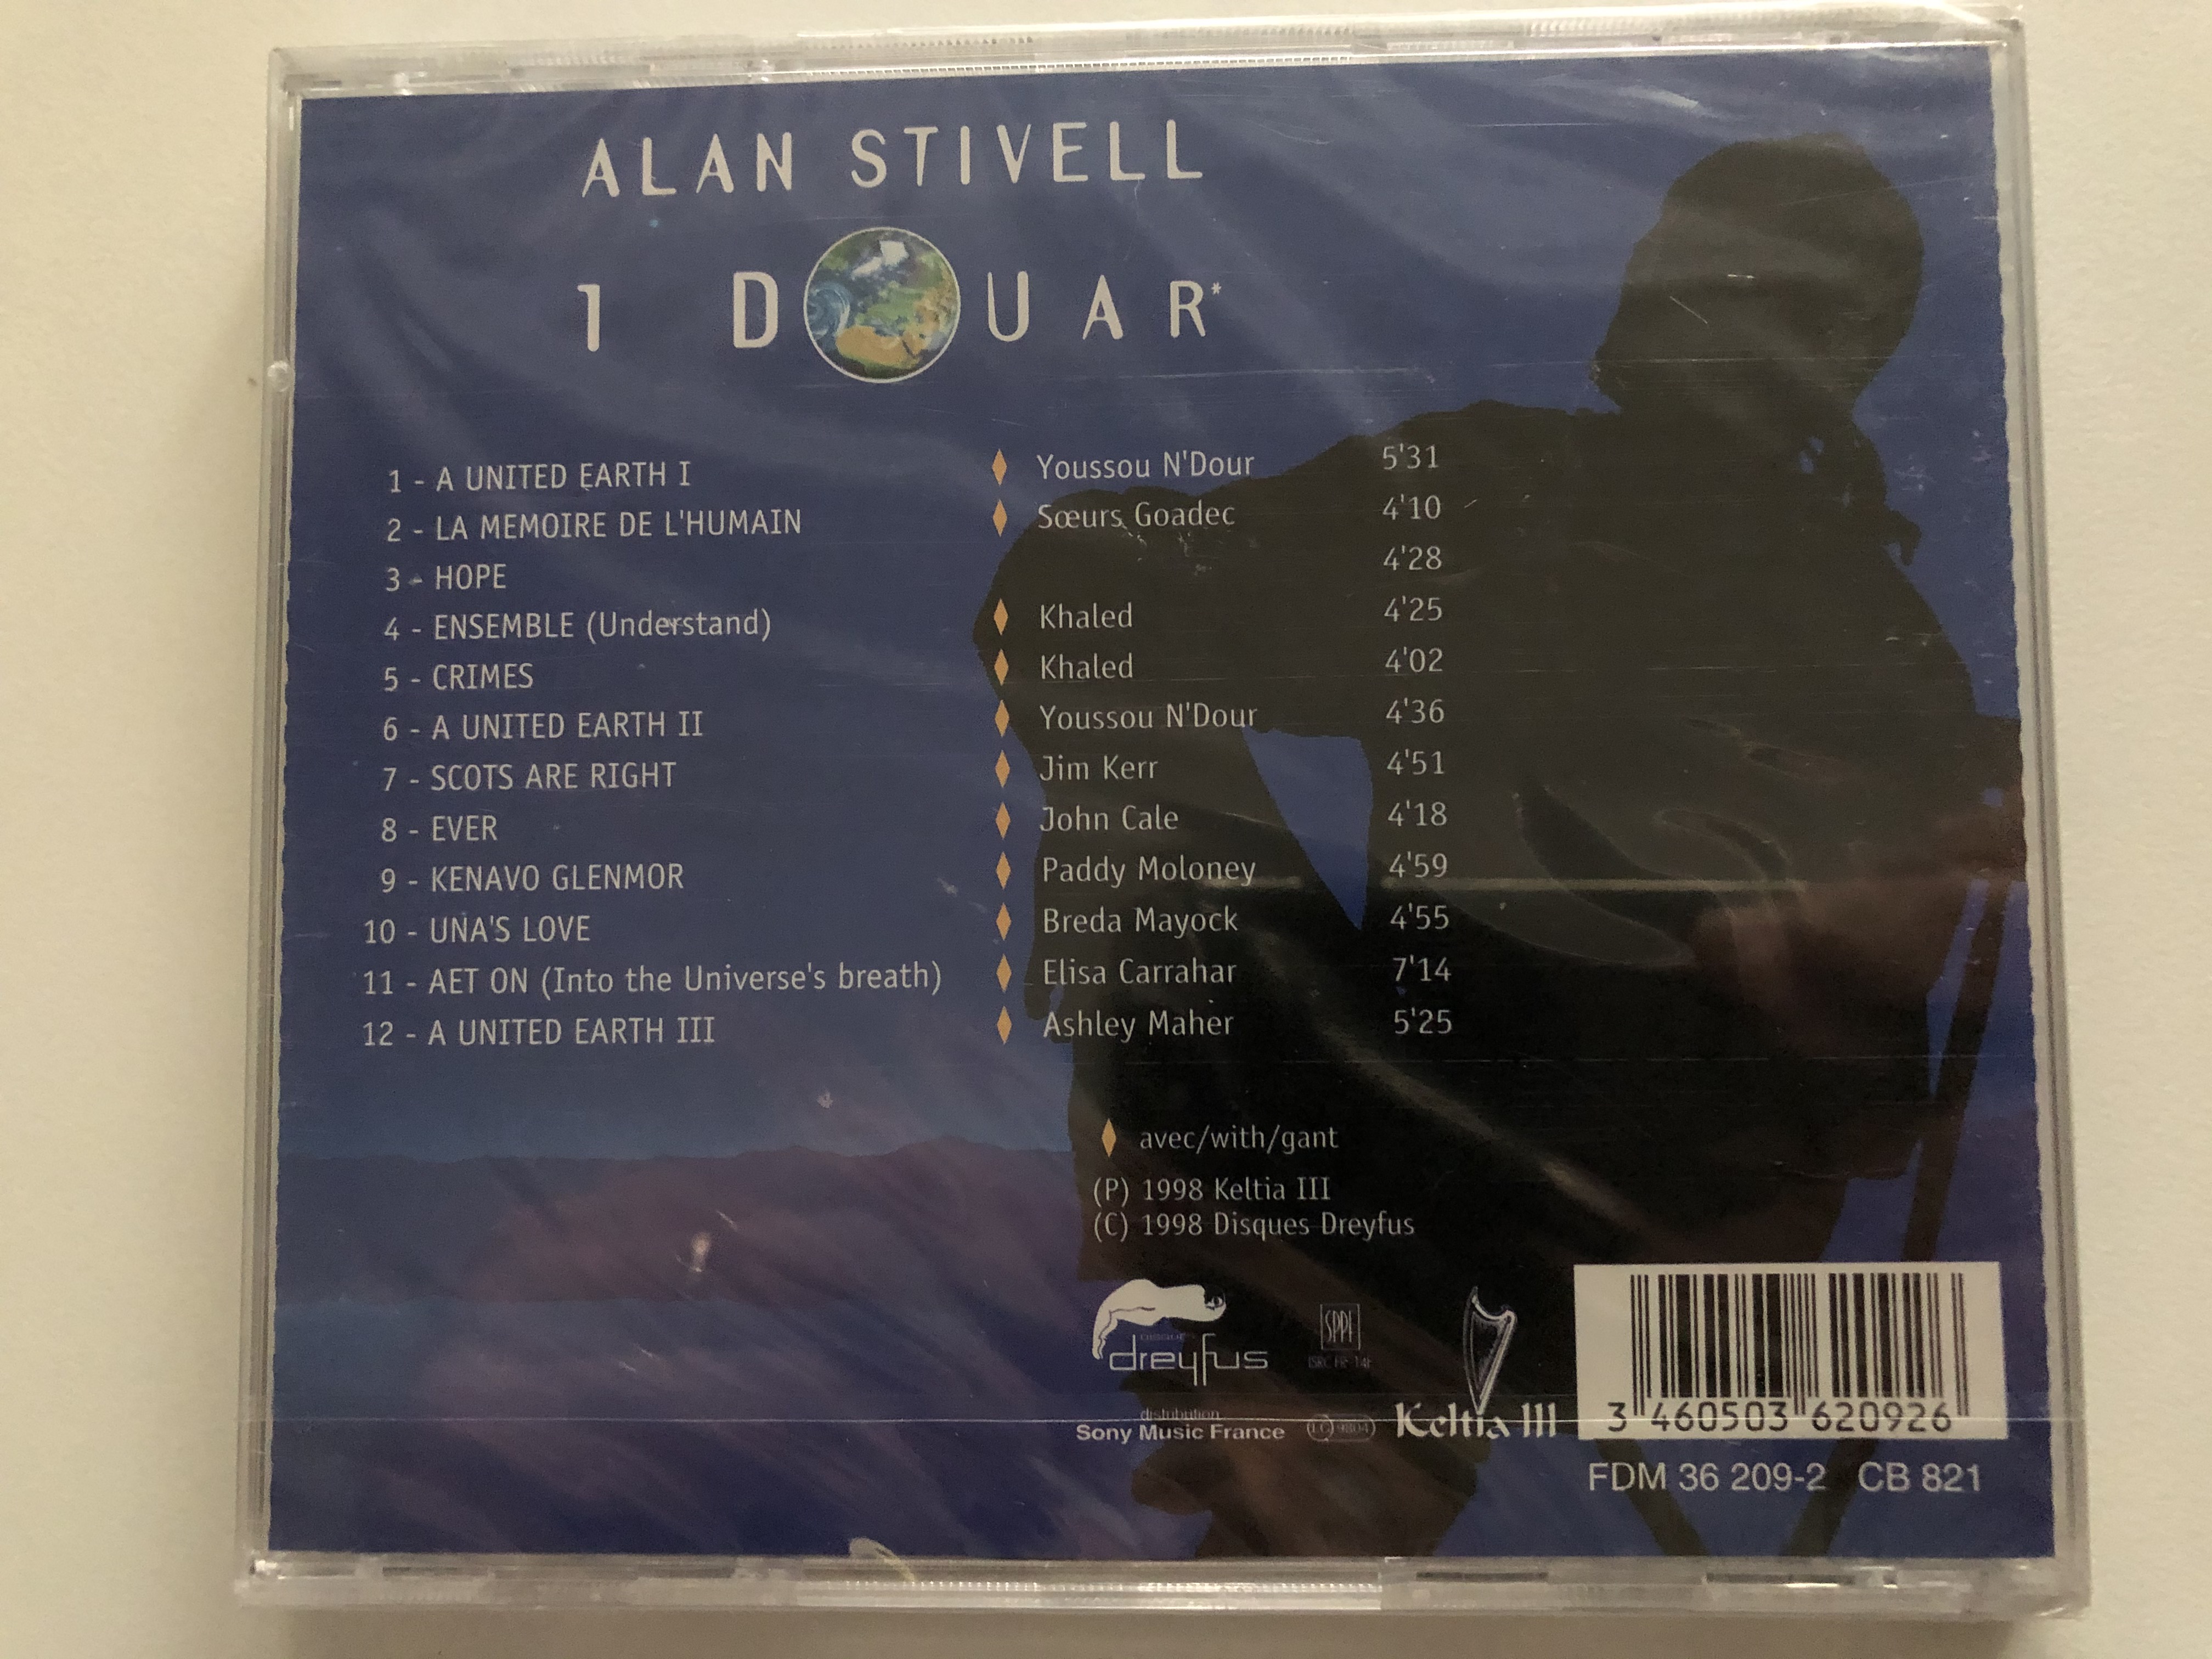 alan-stivell-1-douar-with-youssou-n-dour-s-urs-goadec-khaled-jim-kerr-john-cale-paddy-moloney-...-disques-dreyfus-audio-cd-1998-fdm-36-209-2-2-.jpg